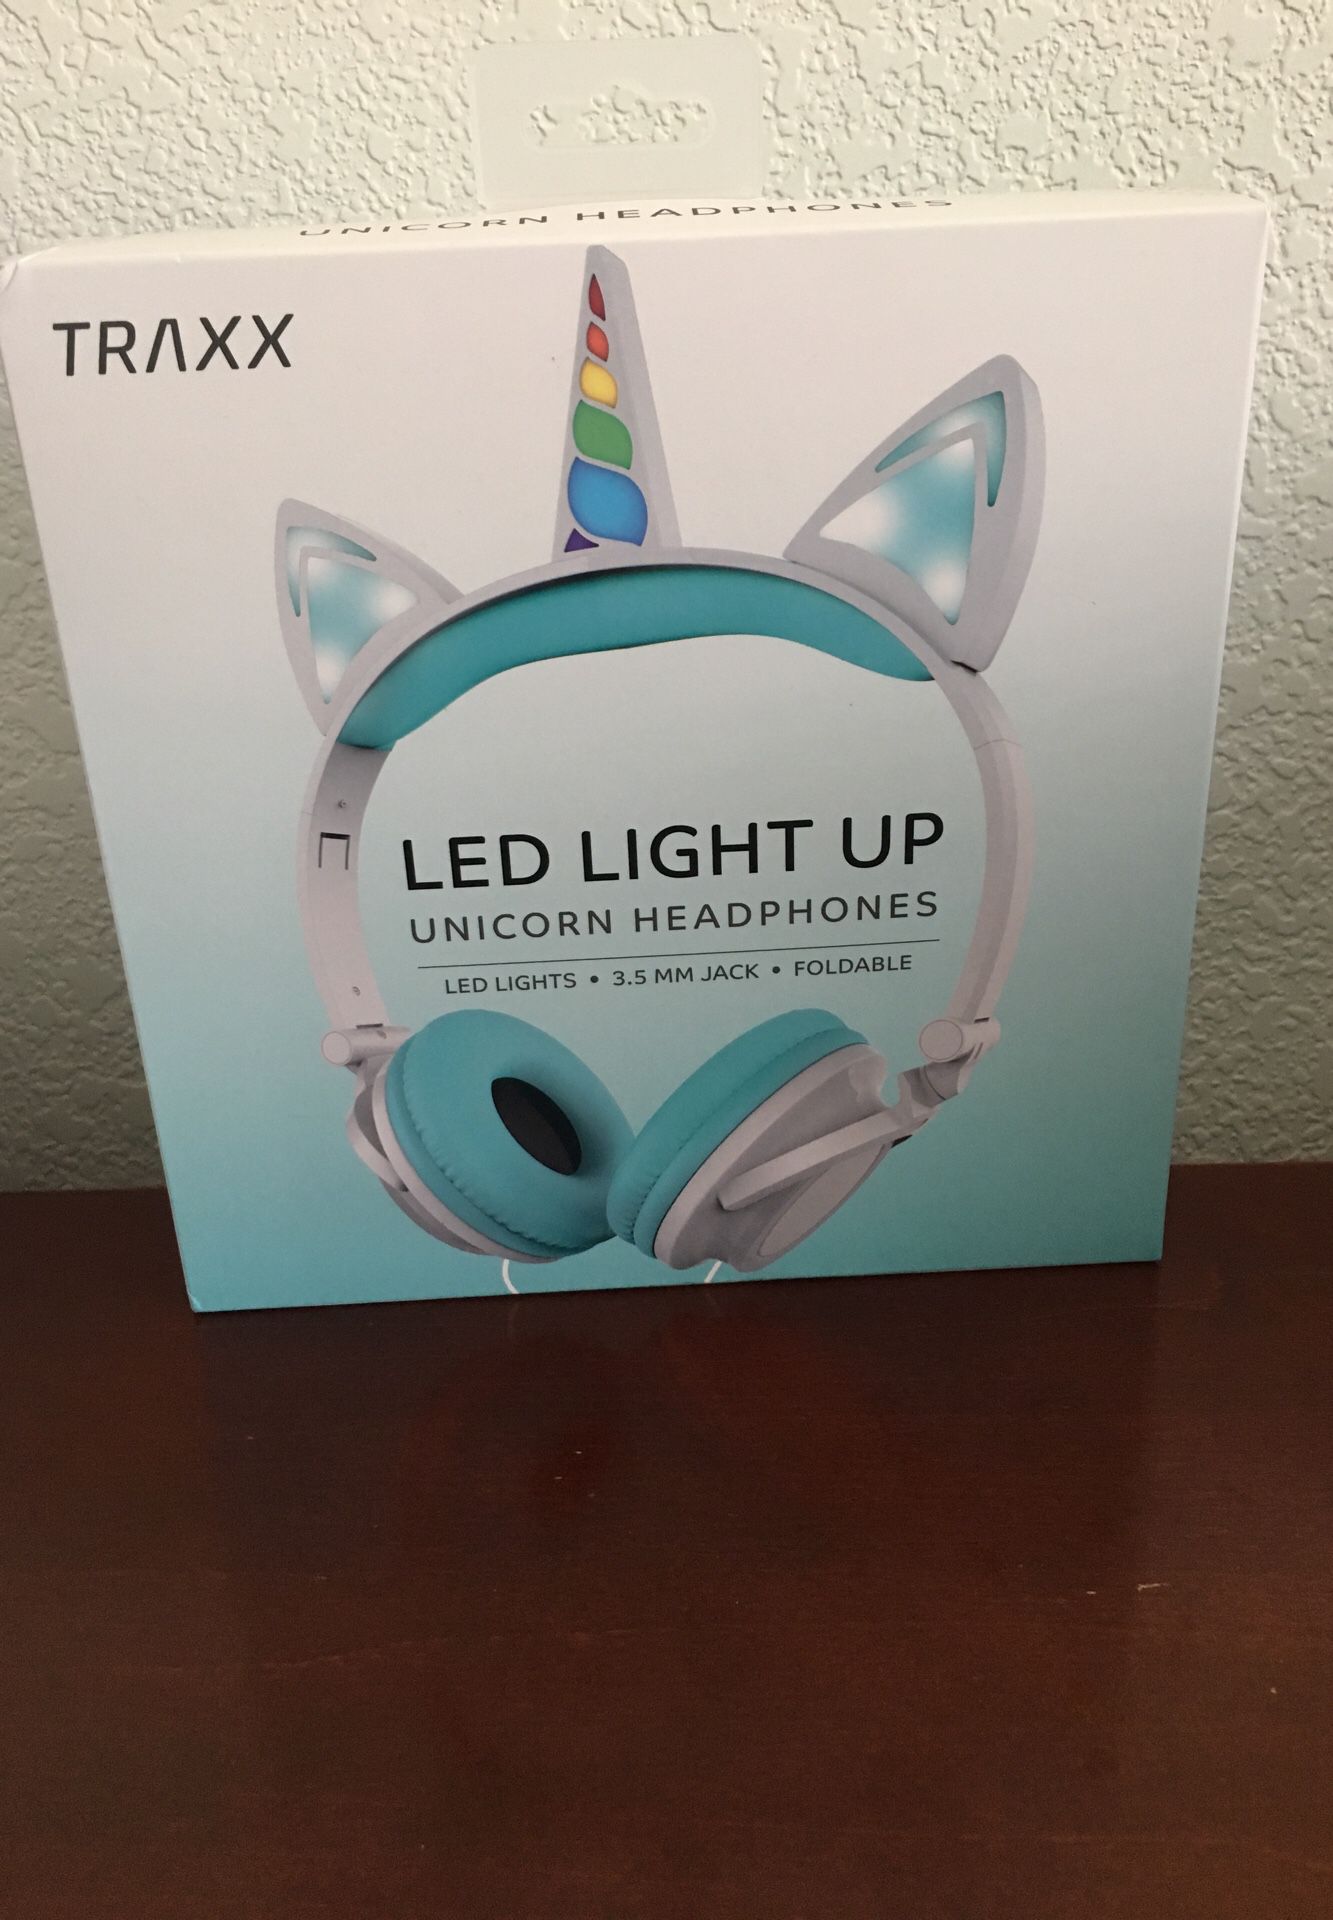 New led light up unicorn headphones